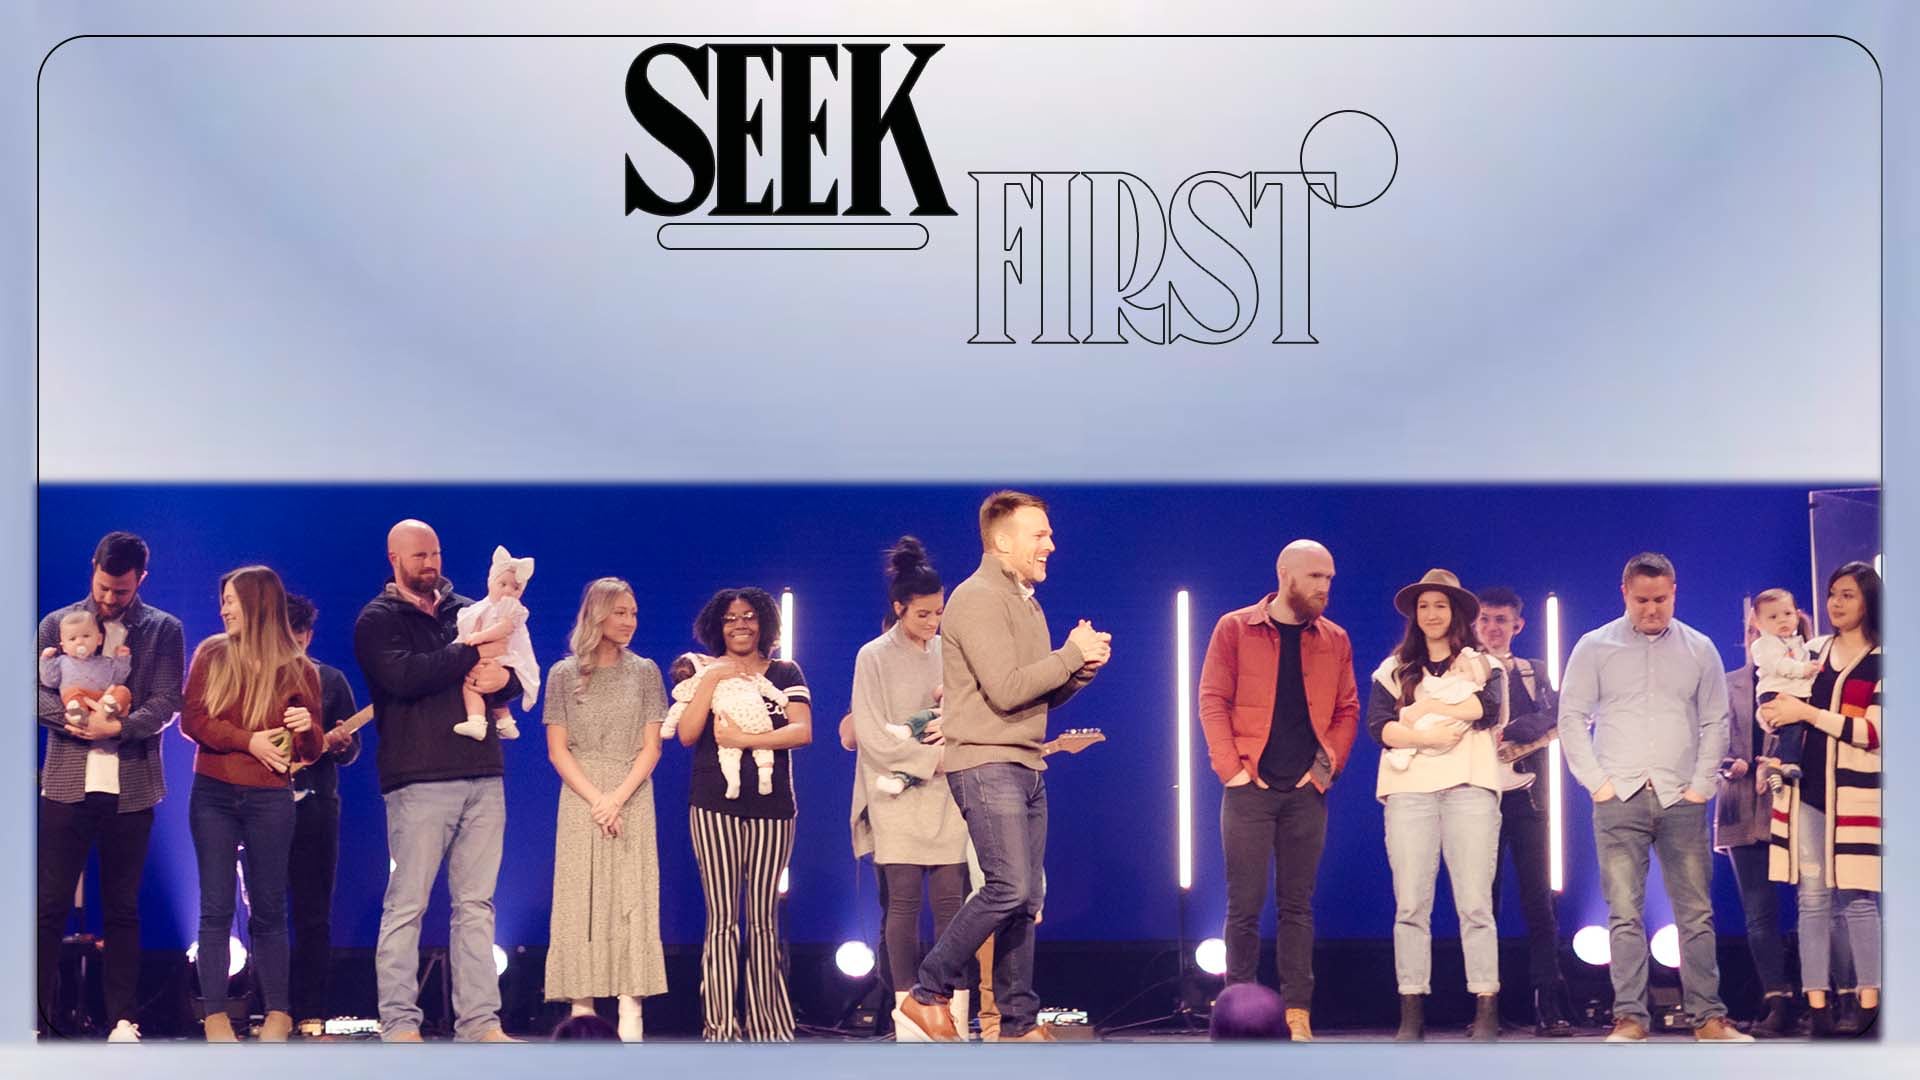 Sermon Series - Seek First